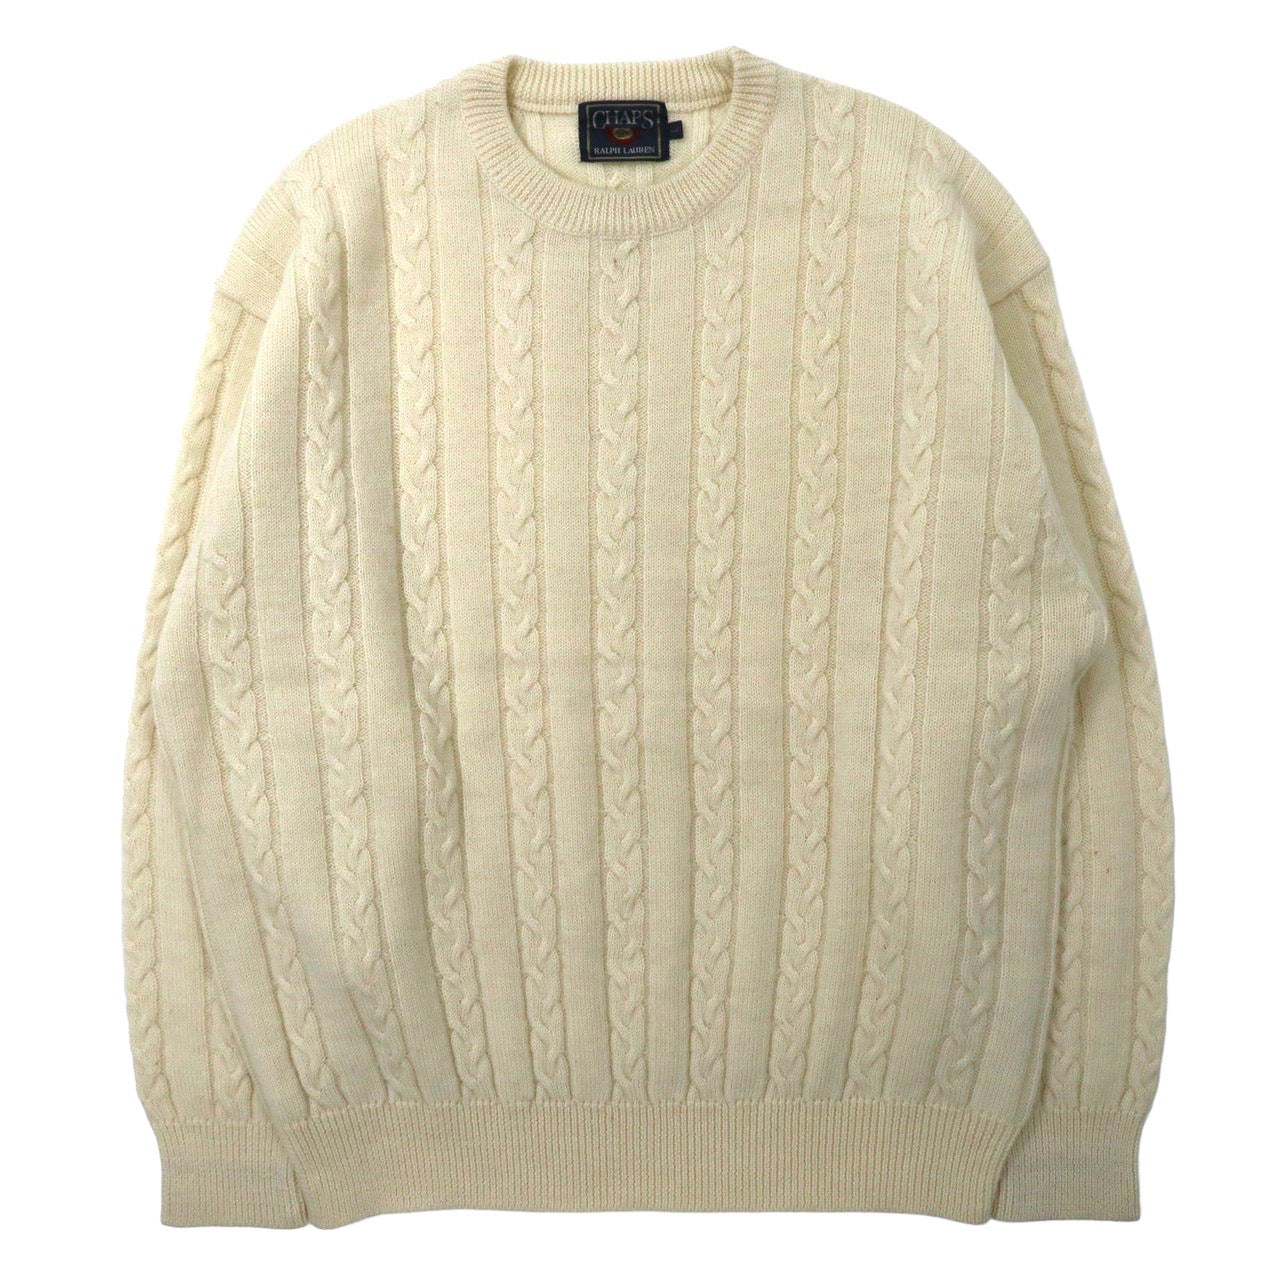 CHAPS RALPH LAUREN Big Size Alan Knit Sweater L White Wool Cable ...